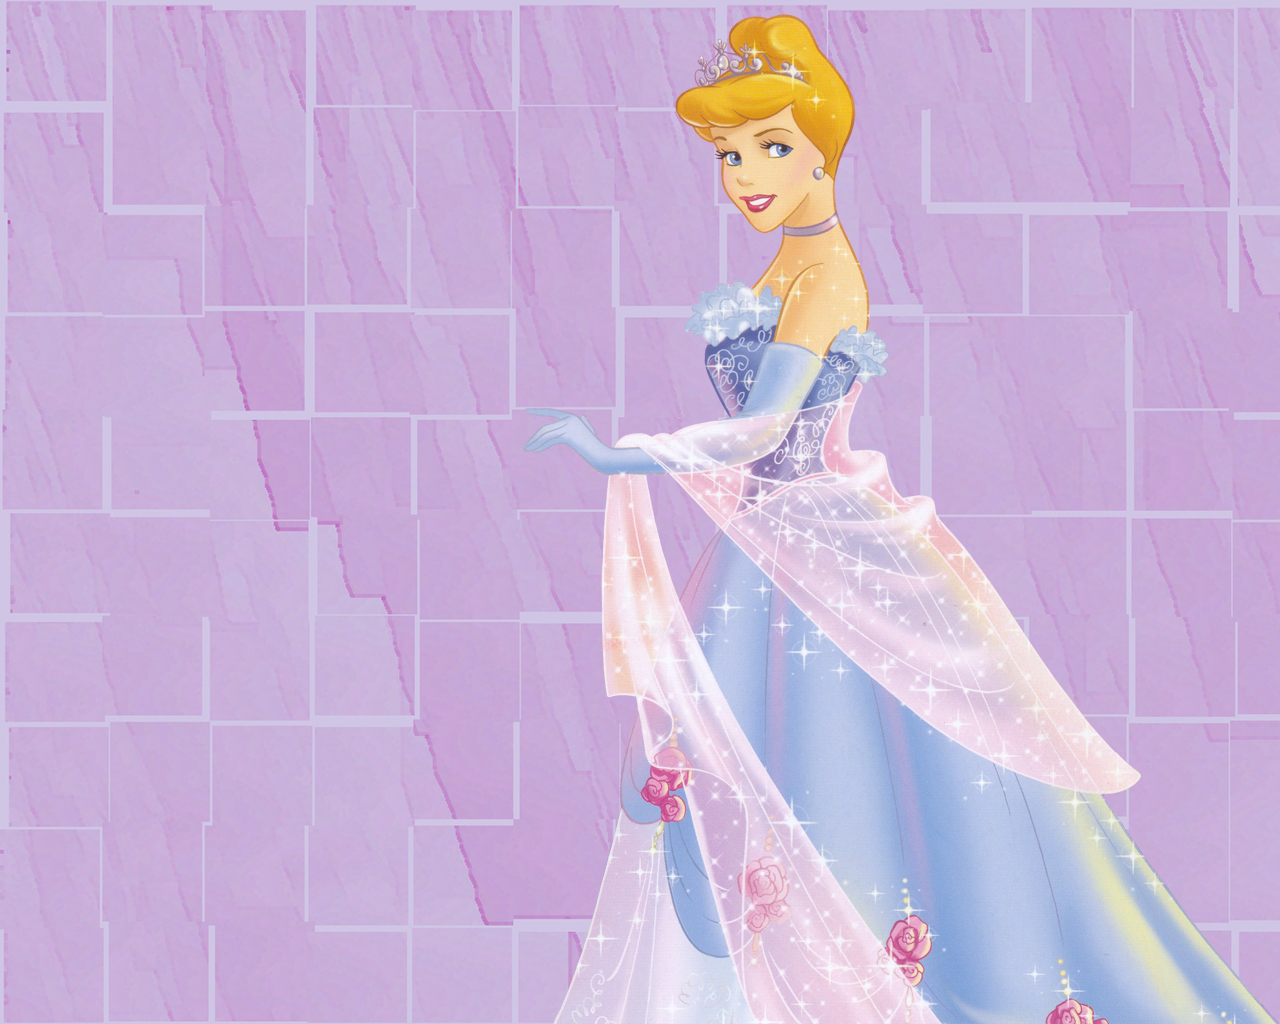 Princess Cinderella - Disney Princess Wallpaper (6168470) - Fanpop